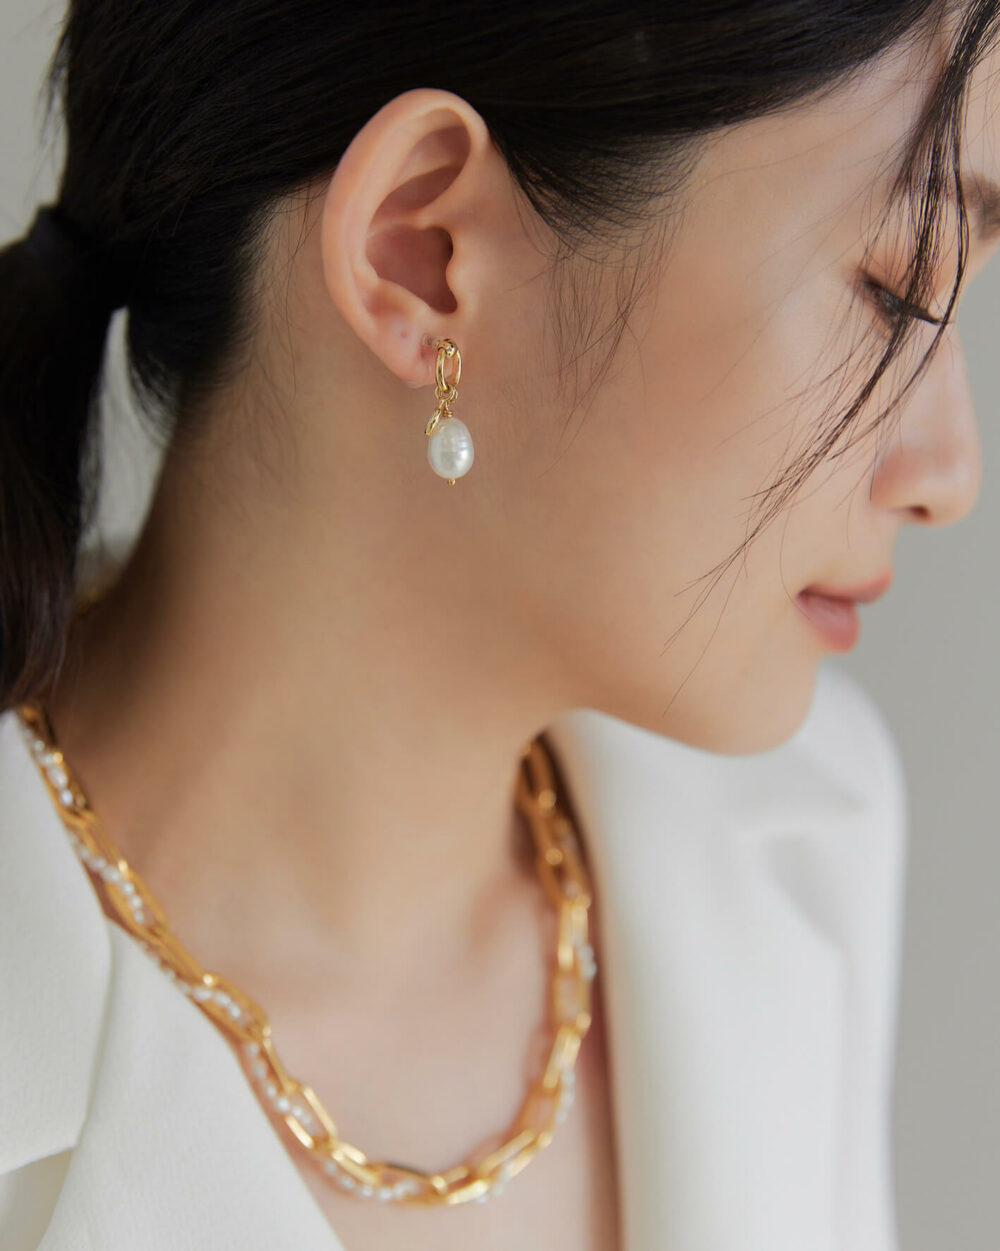 Eco安珂,韓國飾品,韓國耳環,耳針式耳環,矽膠夾耳環,透明耳夾耳環,無痛耳夾耳環,淡水珍珠耳環